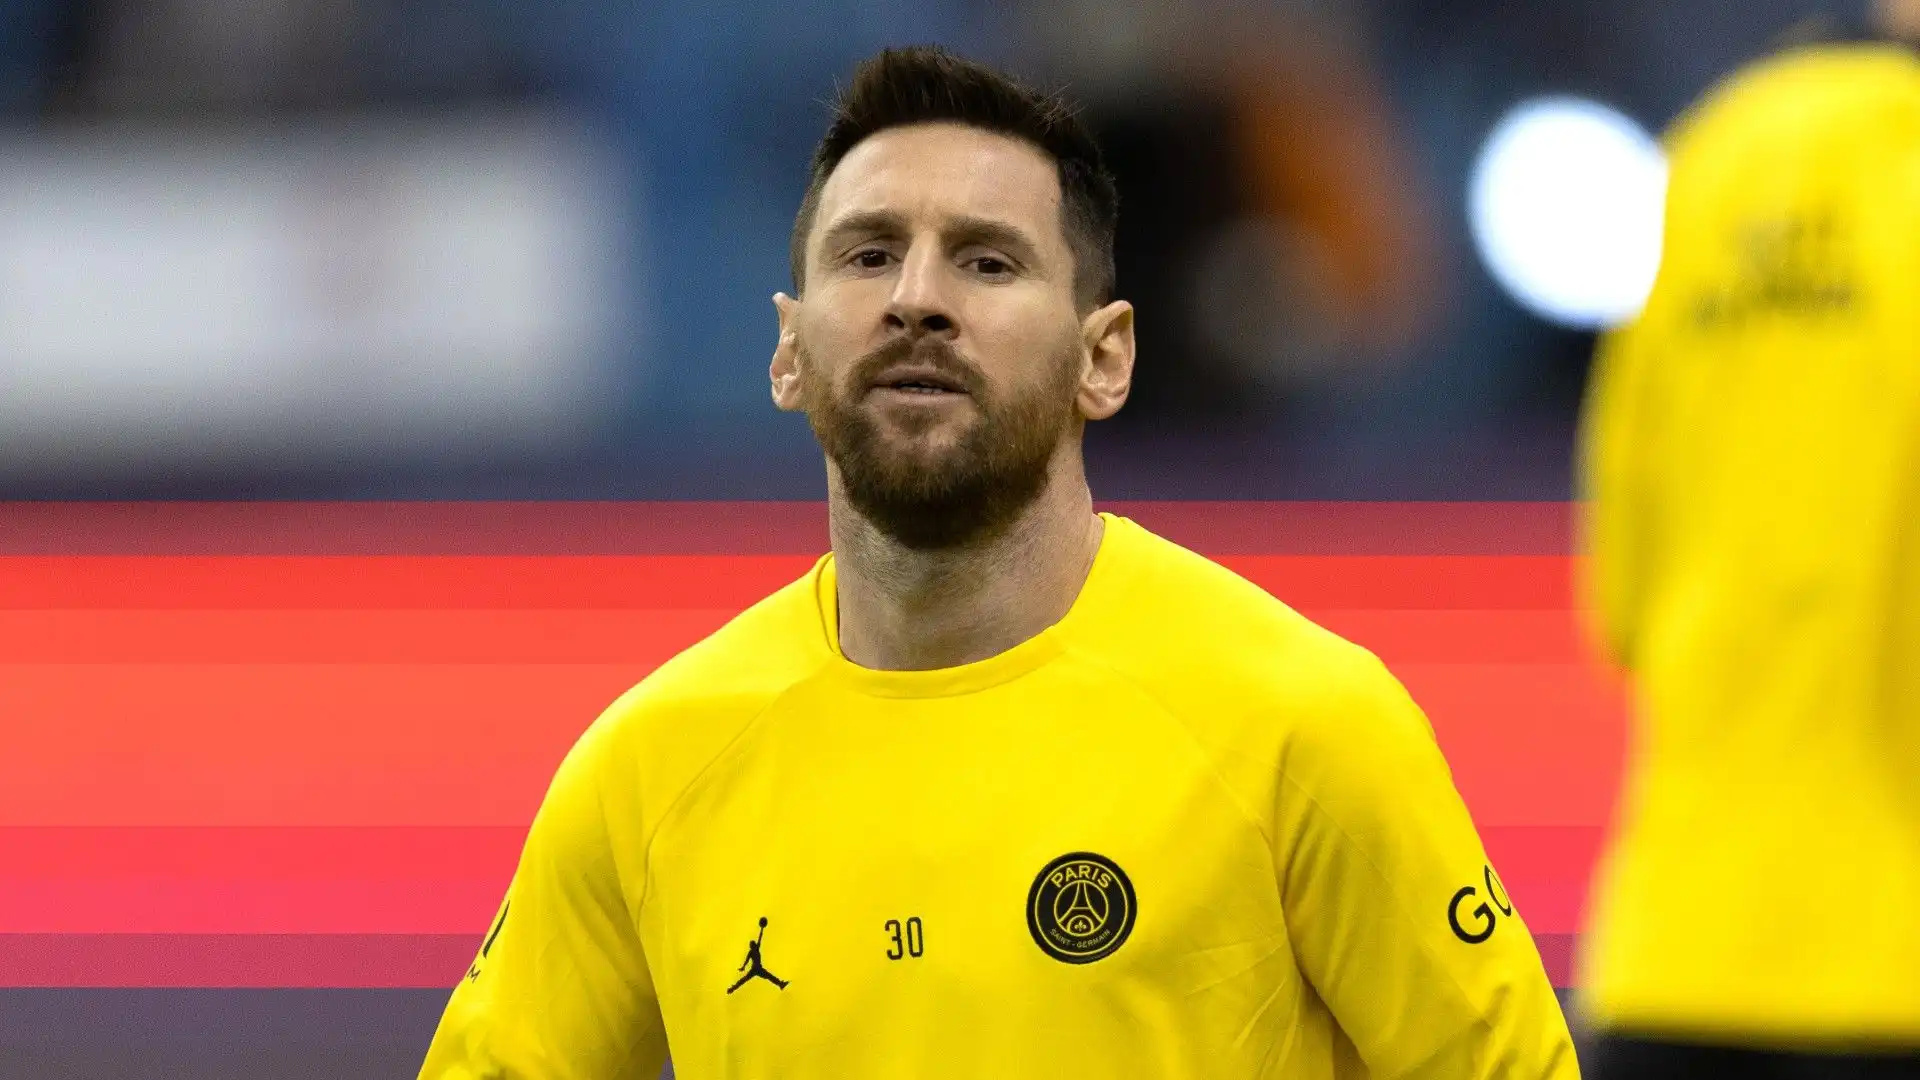 In estate la separazione tra Lionel Messi e il Paris Saint Germain è praticamente certa